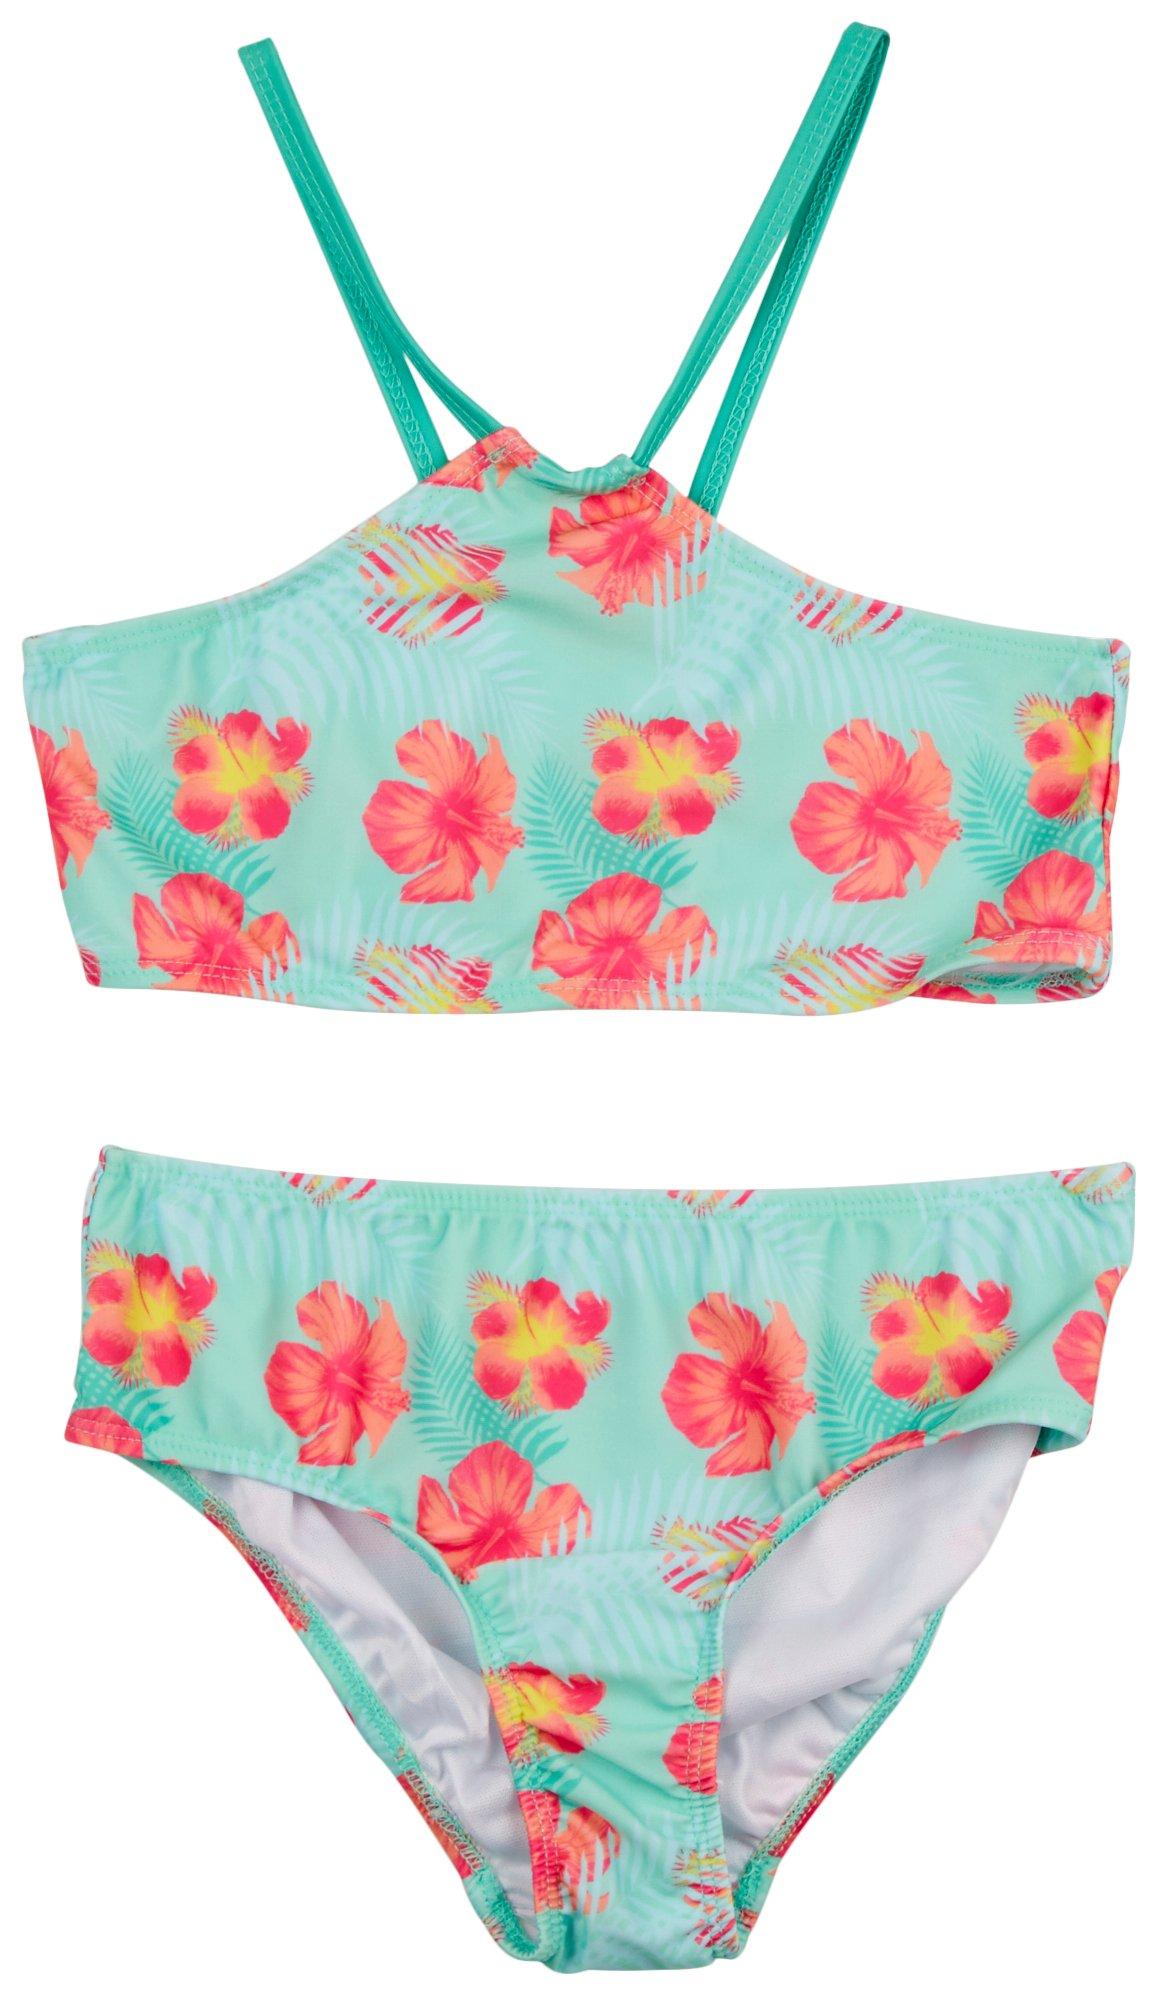 Big Girls 2-pc. Floral Bandana Swimsuit Set